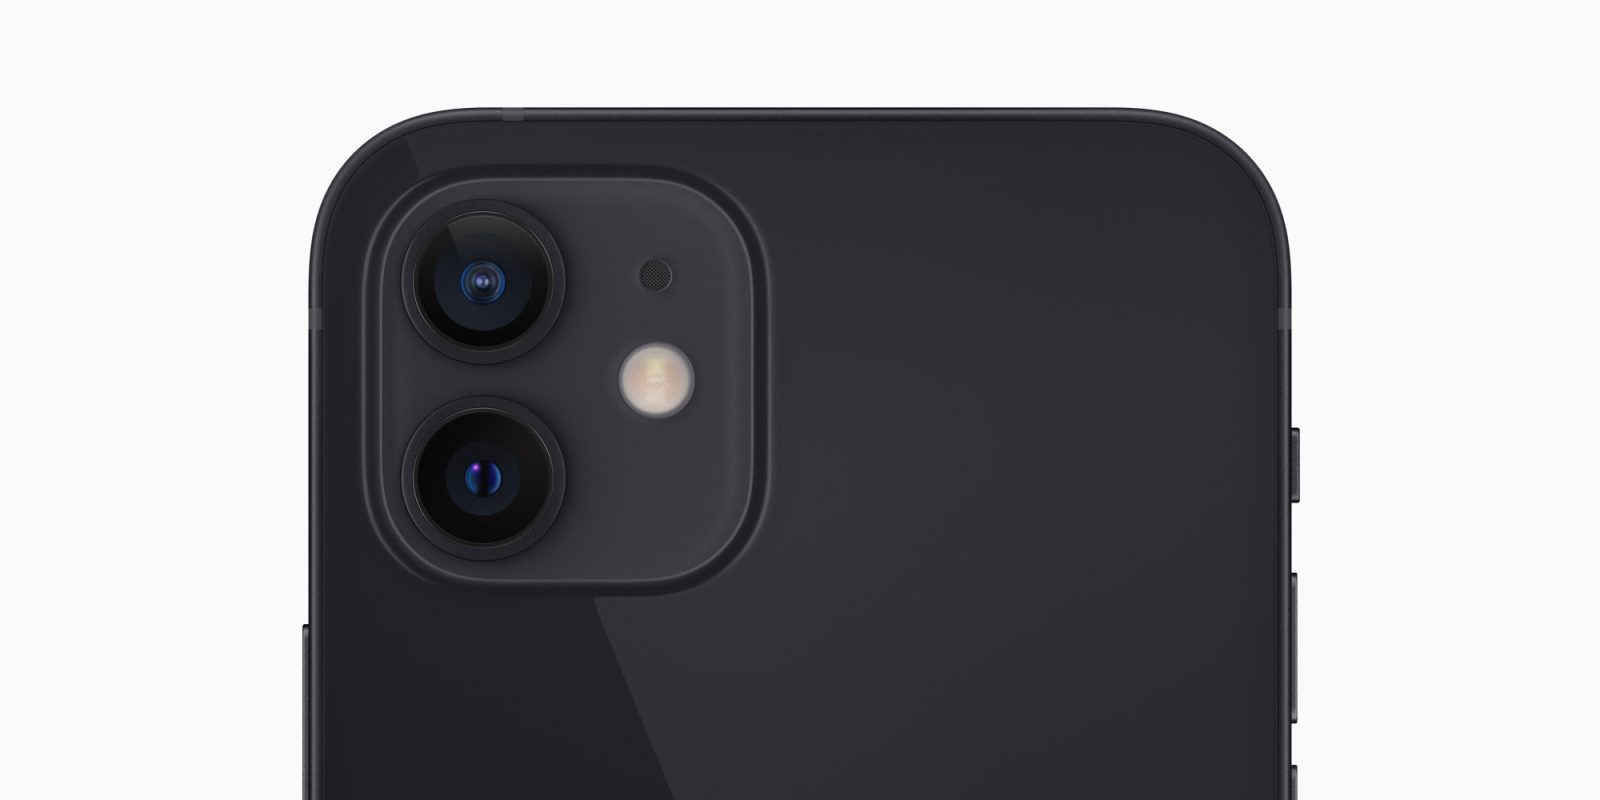 iPhone 16 회로도는 수직으로 정렬된 후면 카메라에 대한 소문을 확증합니다.